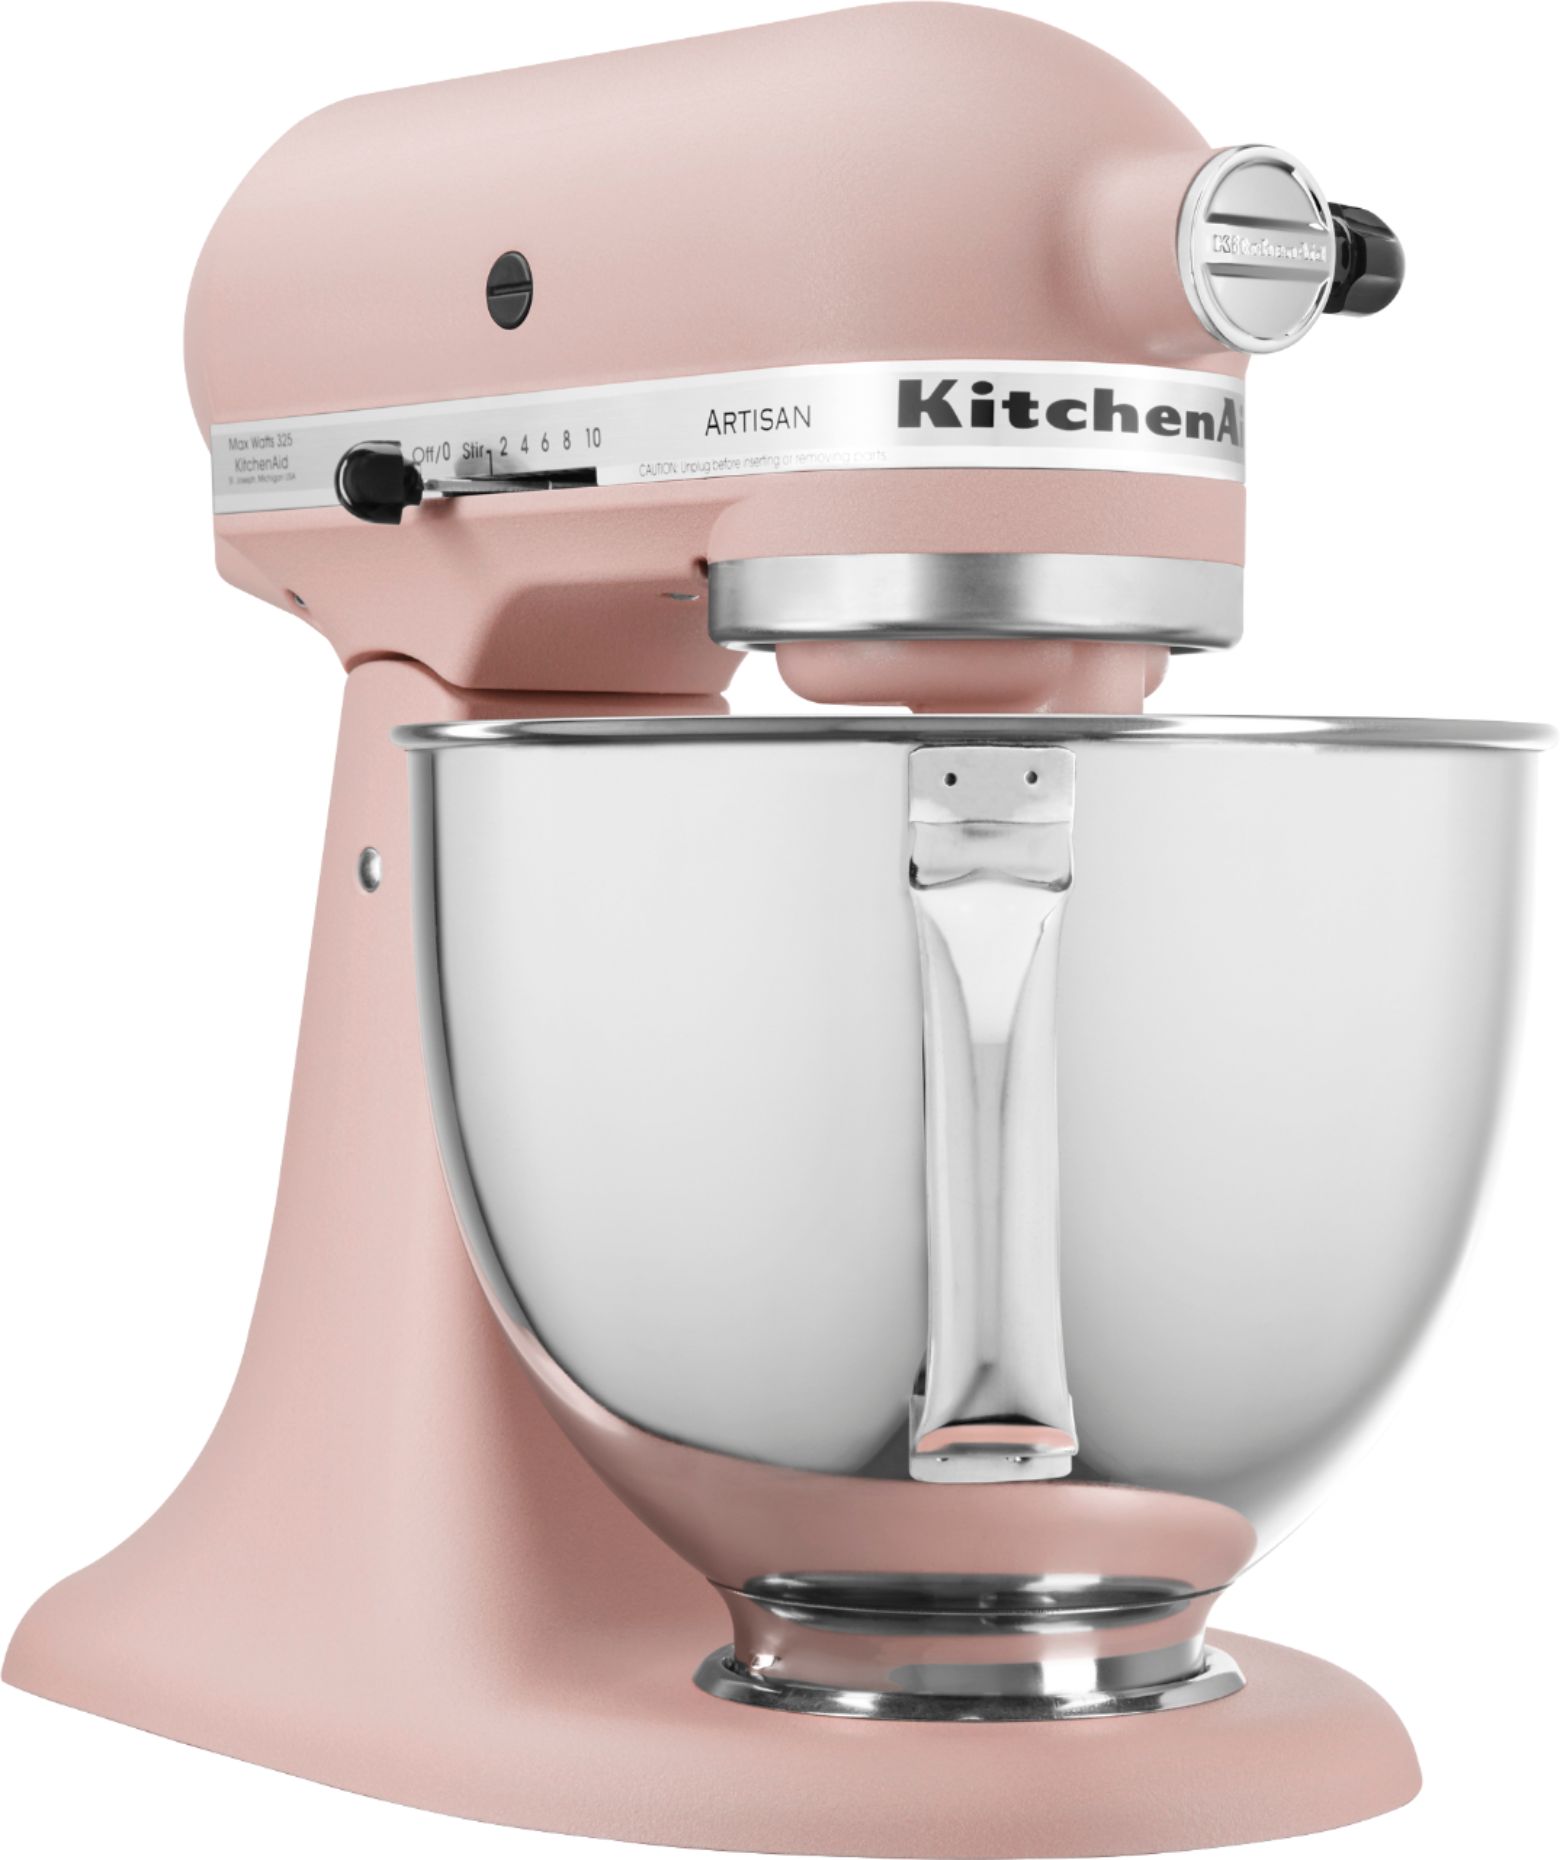 Best Buy: KitchenAid 5-Speed Blender Pink KSB560PK